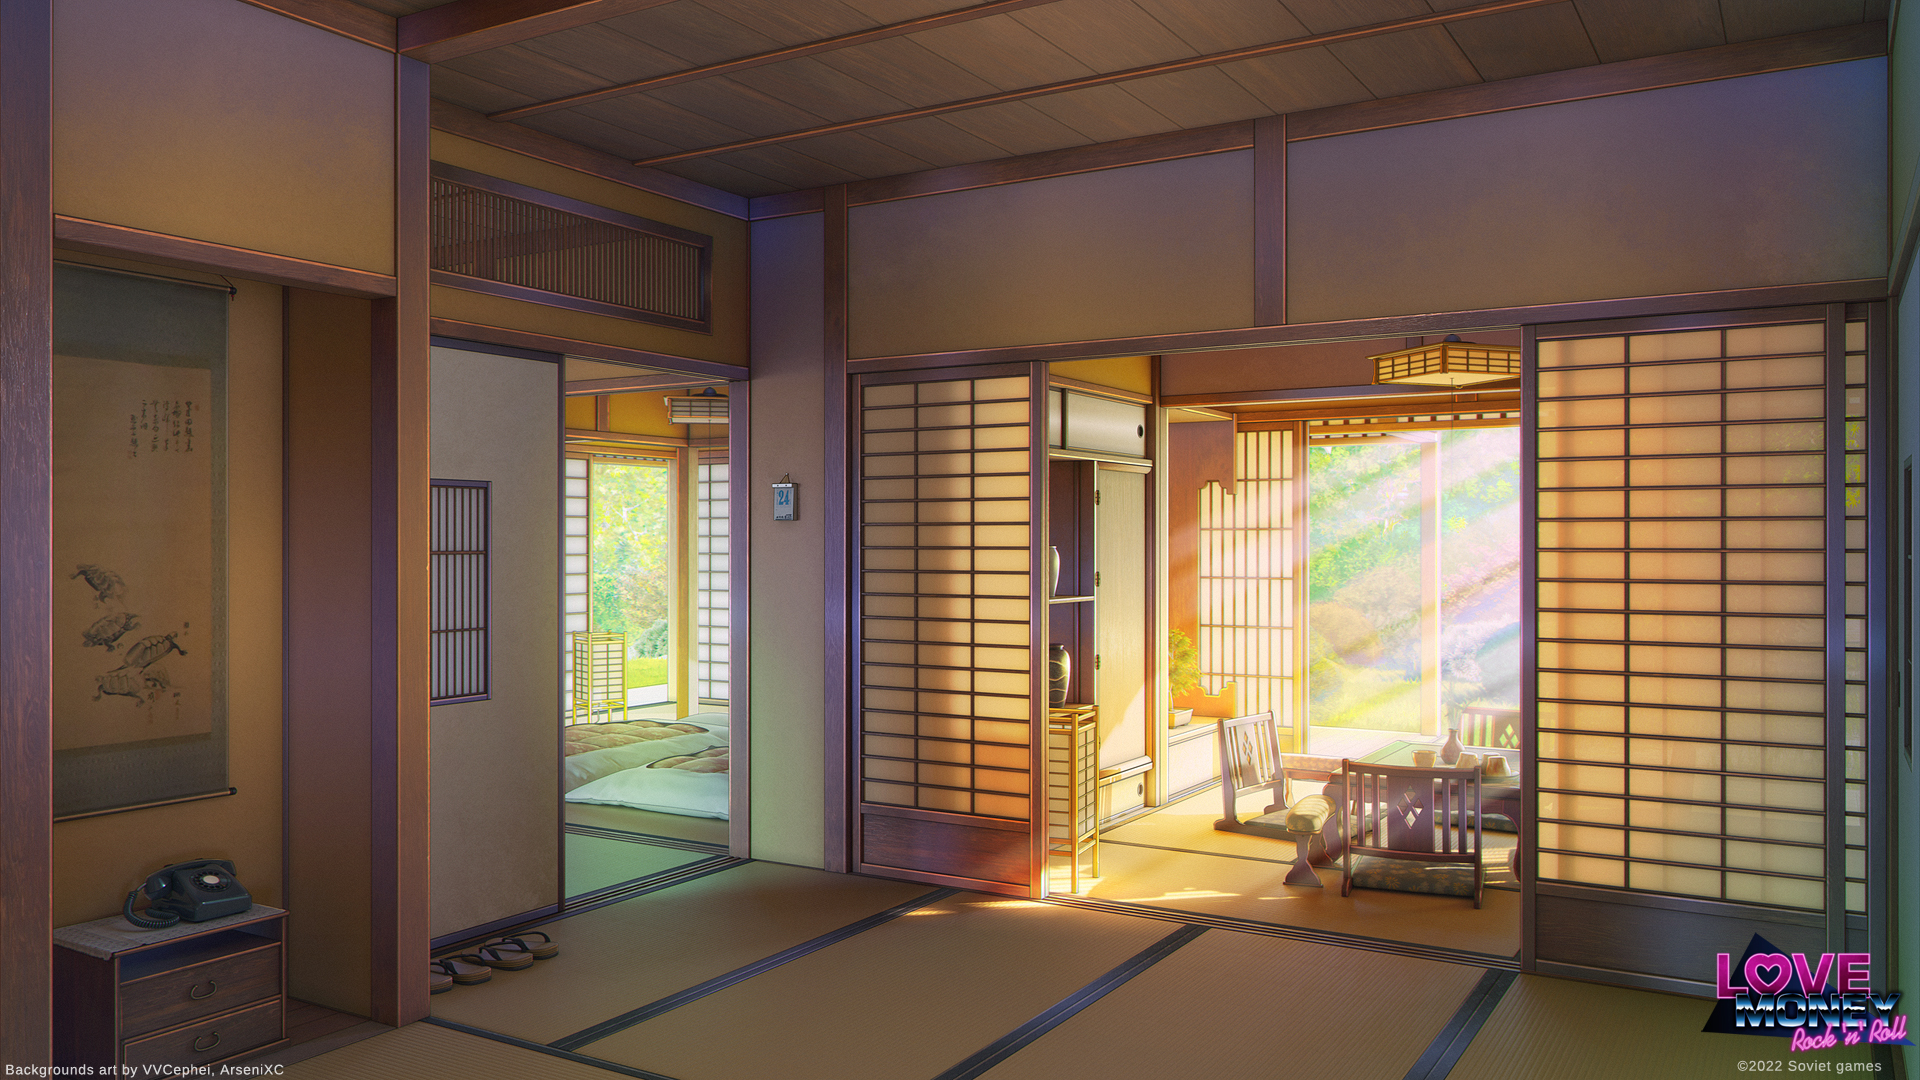 Interior of Japanese village house by arsenixc on DeviantArt